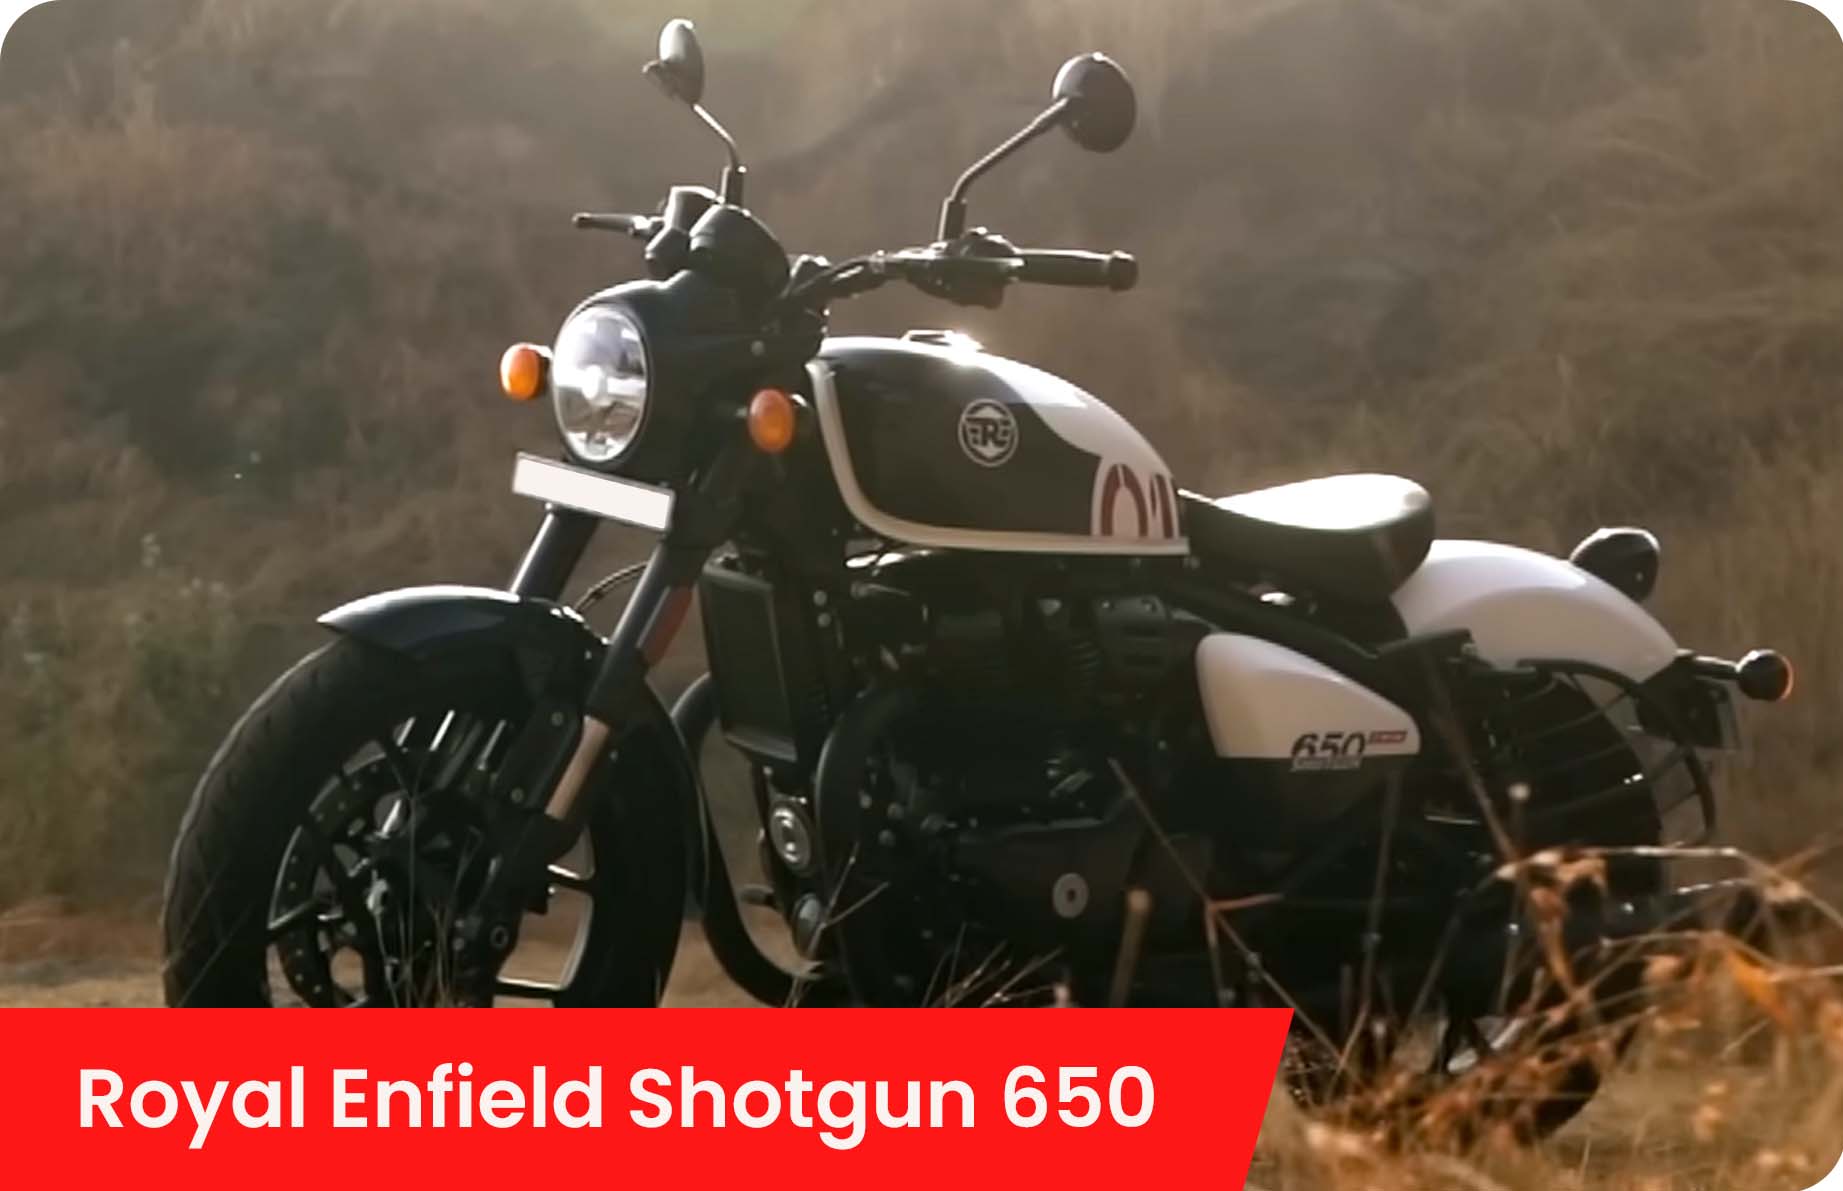 Royal Enfield Shotgun 650 Power, Features, & Customization